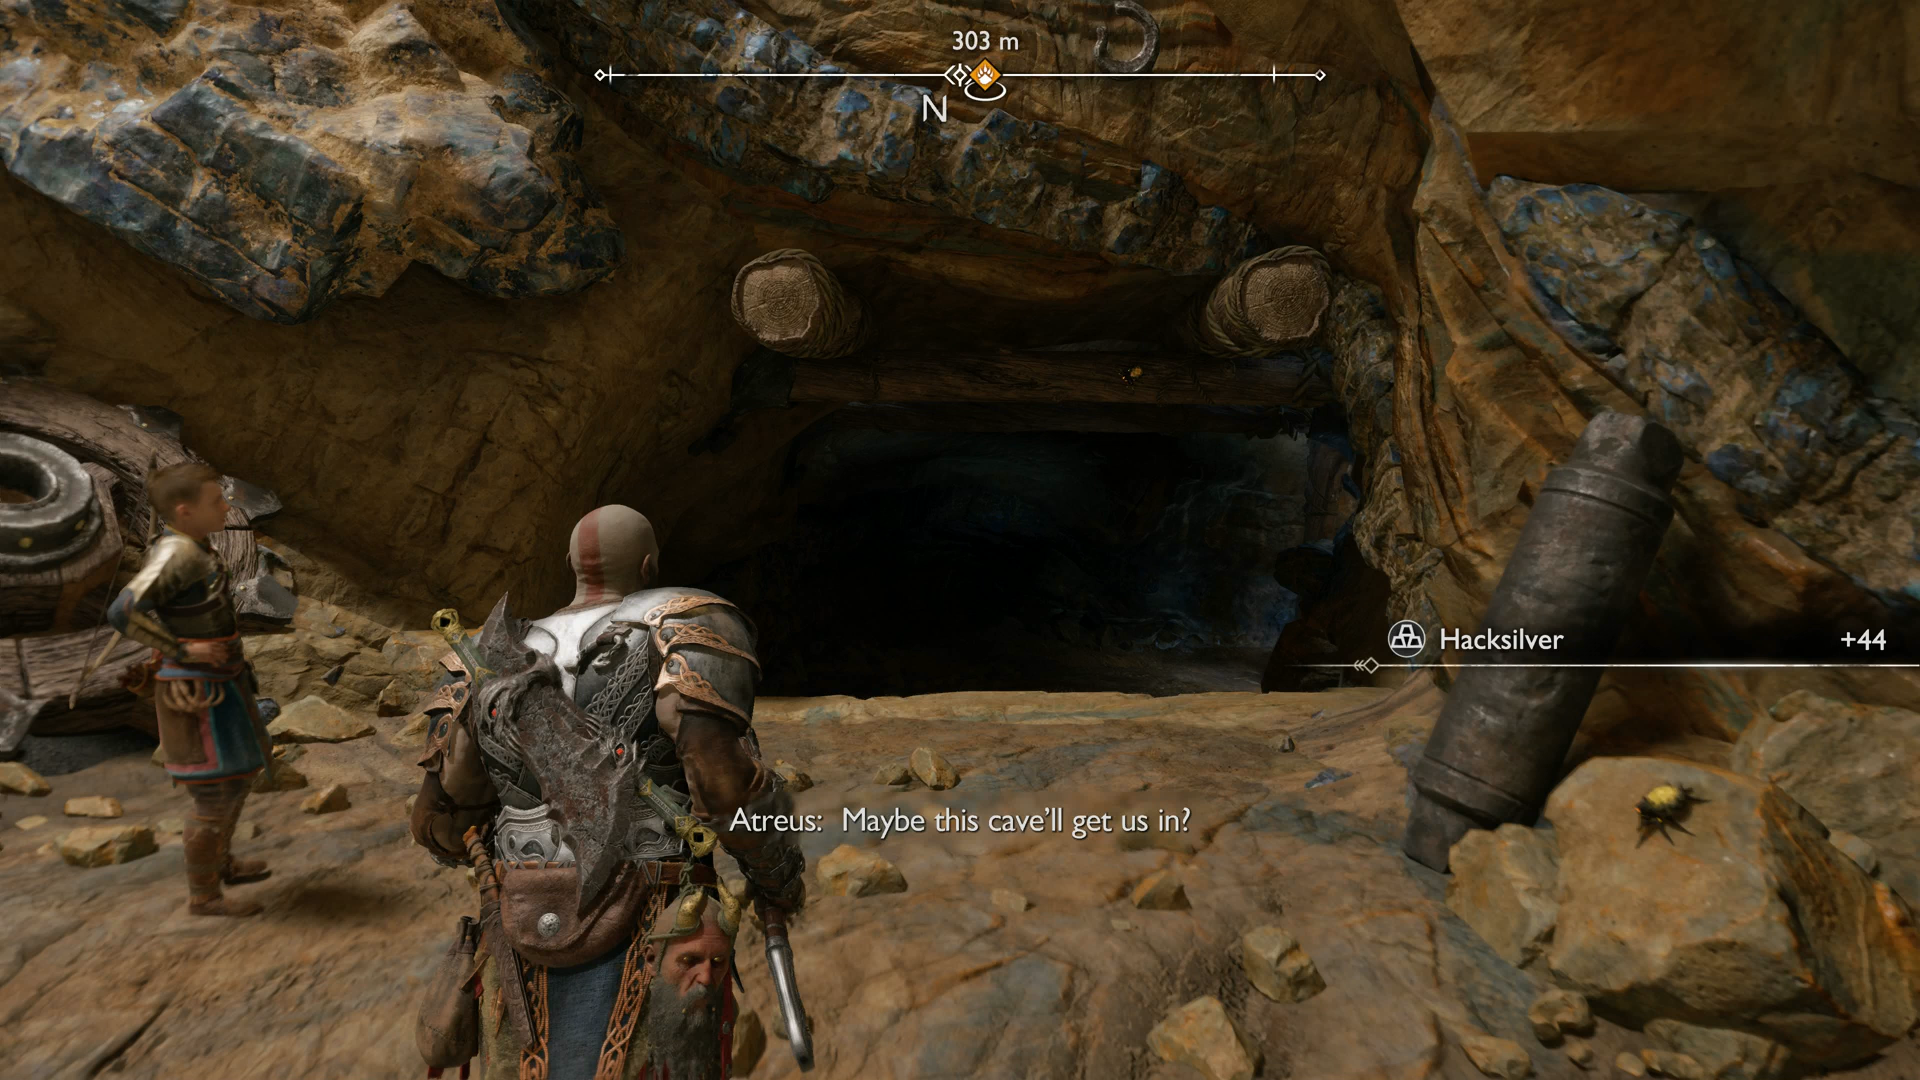 Kratos and Atreus descend through a hole into The Applecore